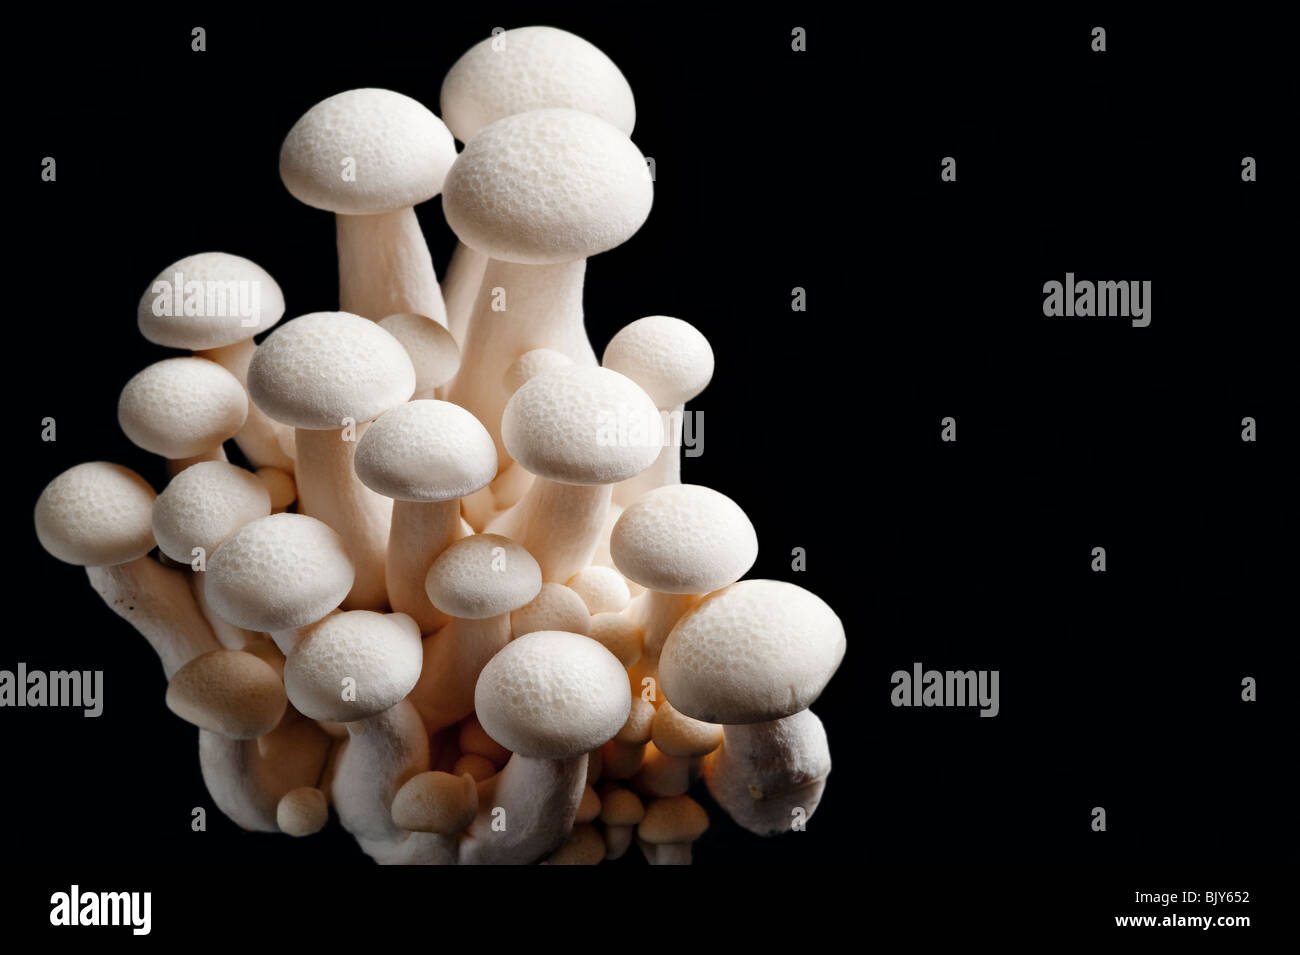 Exotic Shimenji Japanese mushrooms close up in studio setting Stock Photo